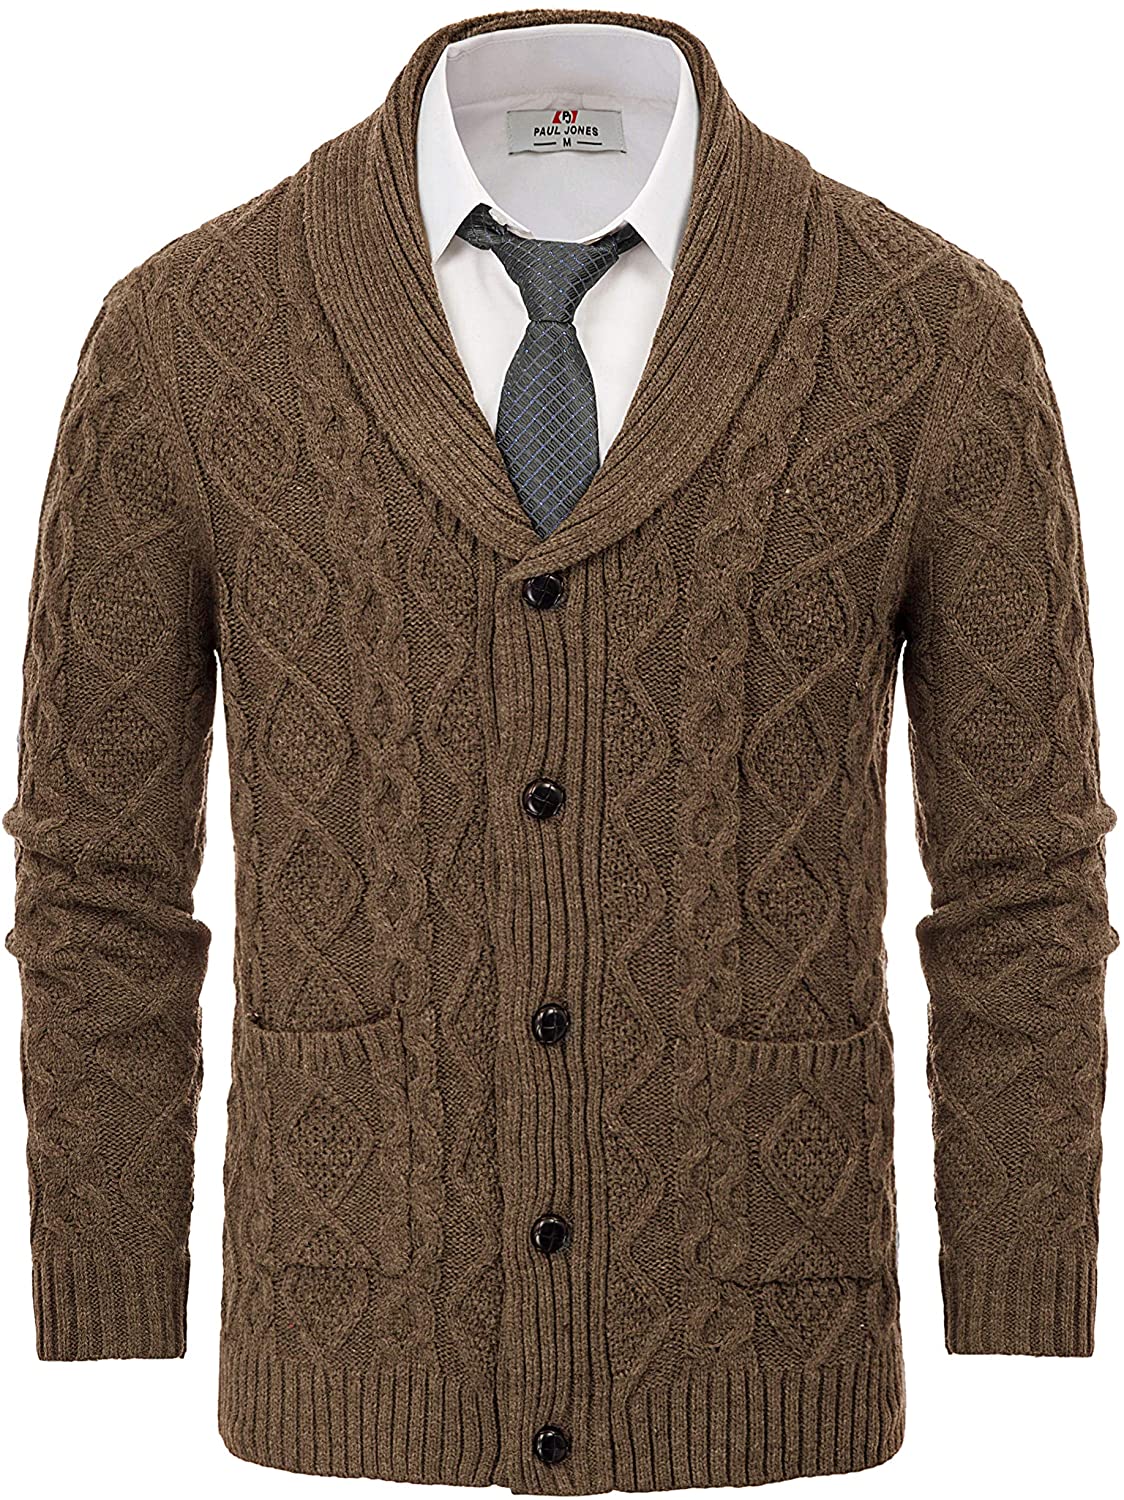 PJ PAUL JONES Mens Cardigan Sweater Shawl Collar Button Down Knitwear 